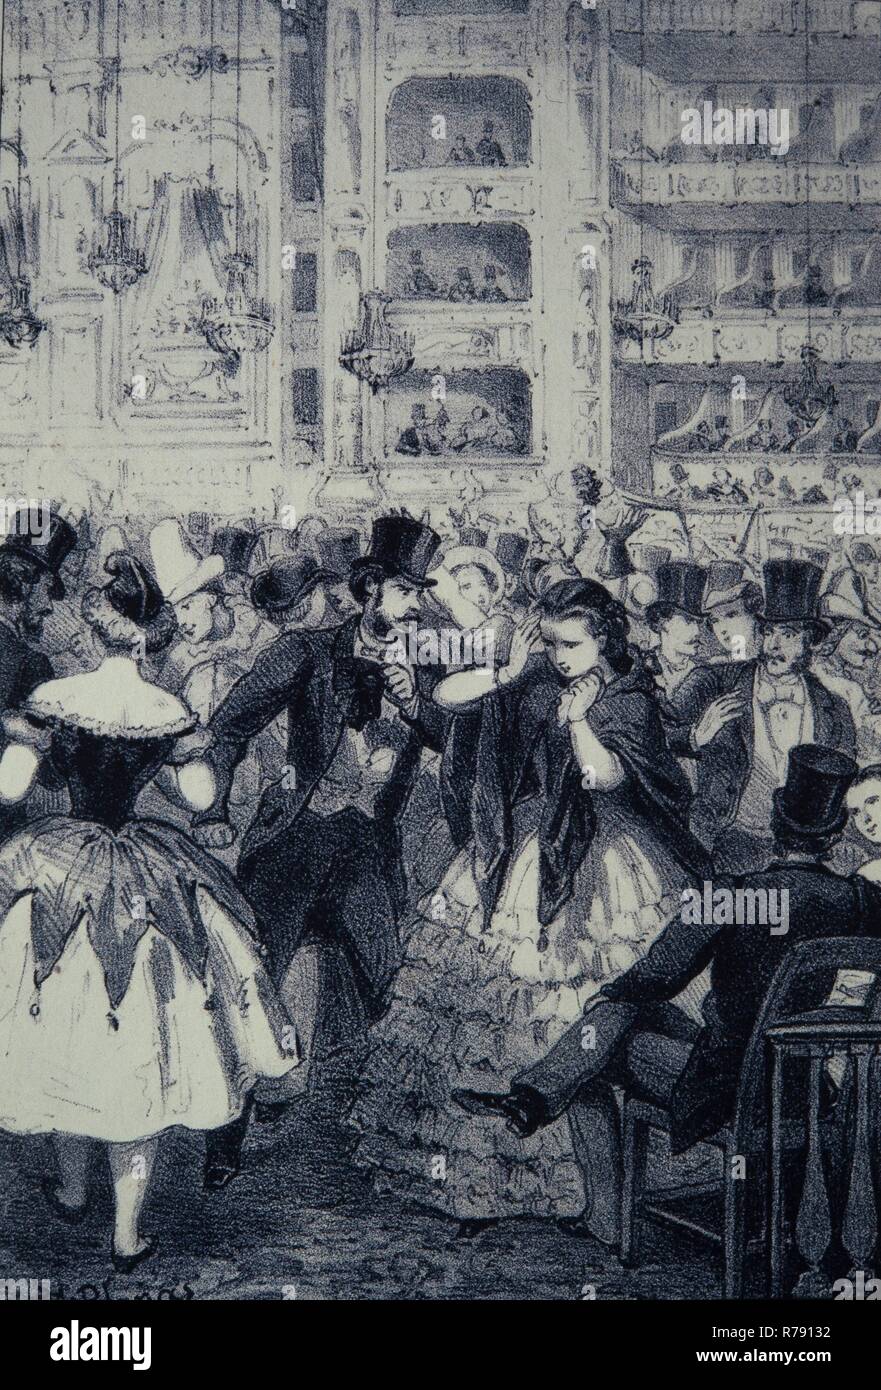 Baile en el Teatro Liceo de Barcelone. La gravure. Siglo XIX. Banque D'Images